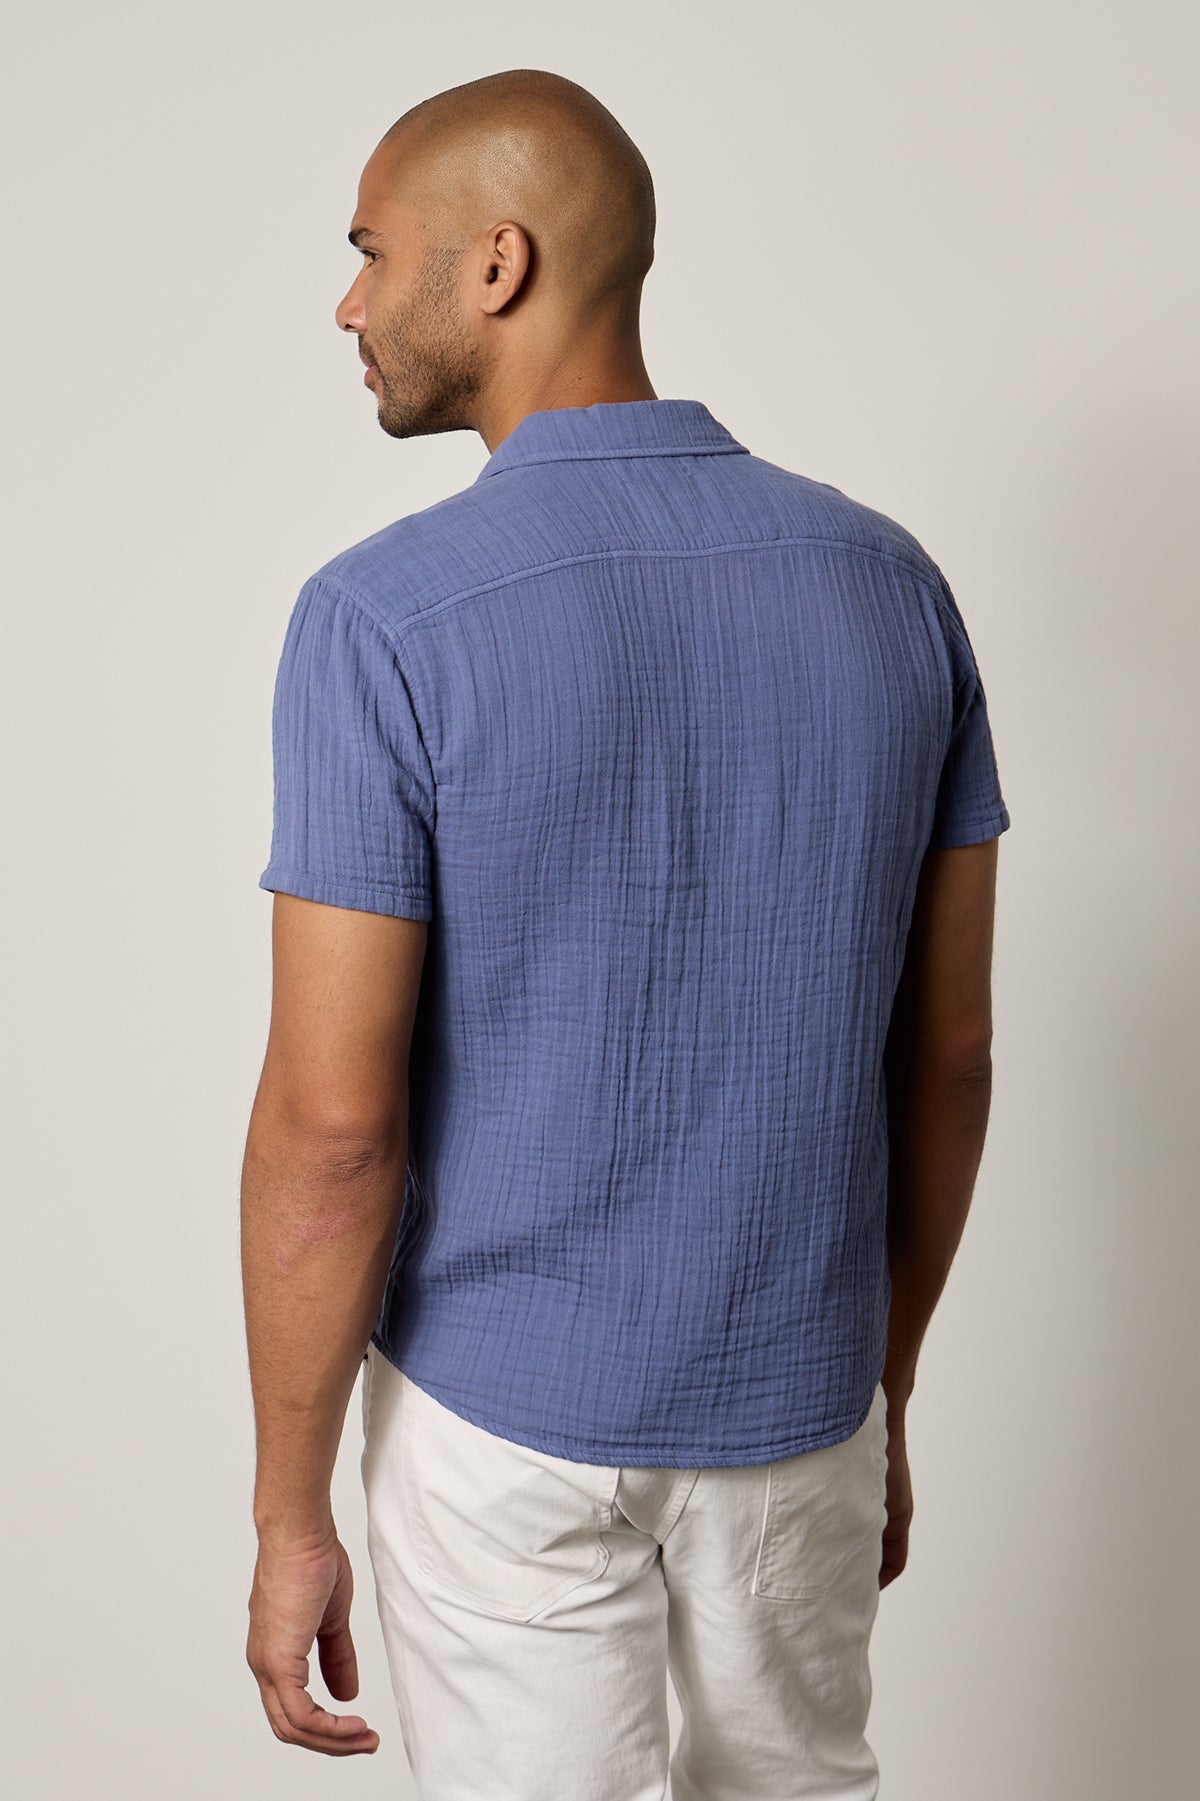 Christian Shirt in citadel blue with white denim back-26266328432833